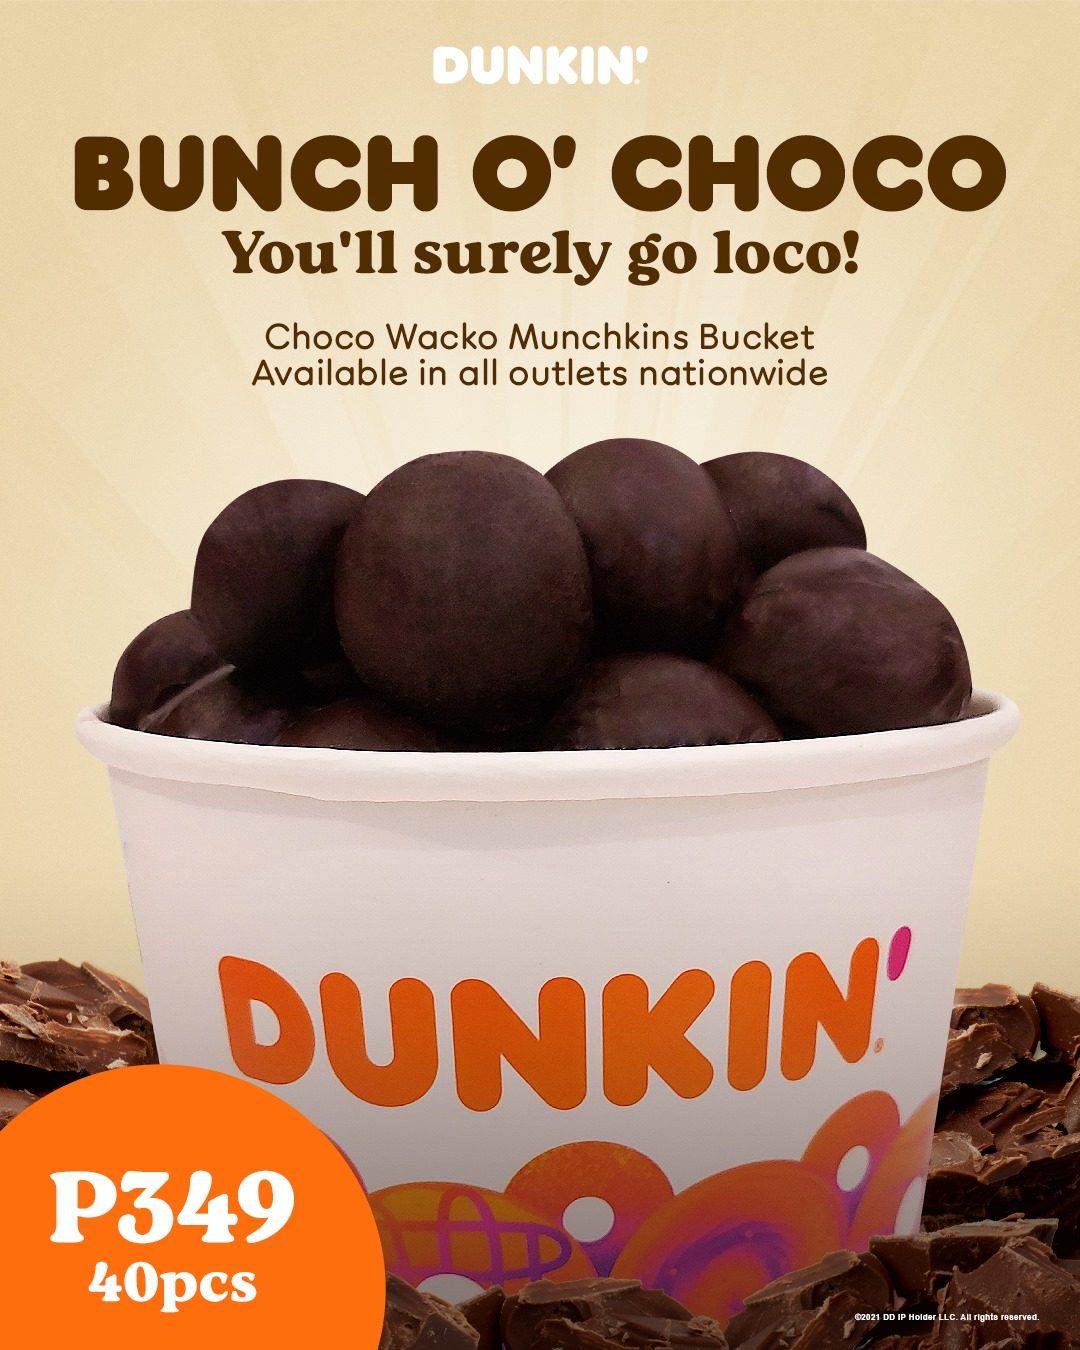 Dunkin’ choco wacko munchkins now available in buckets